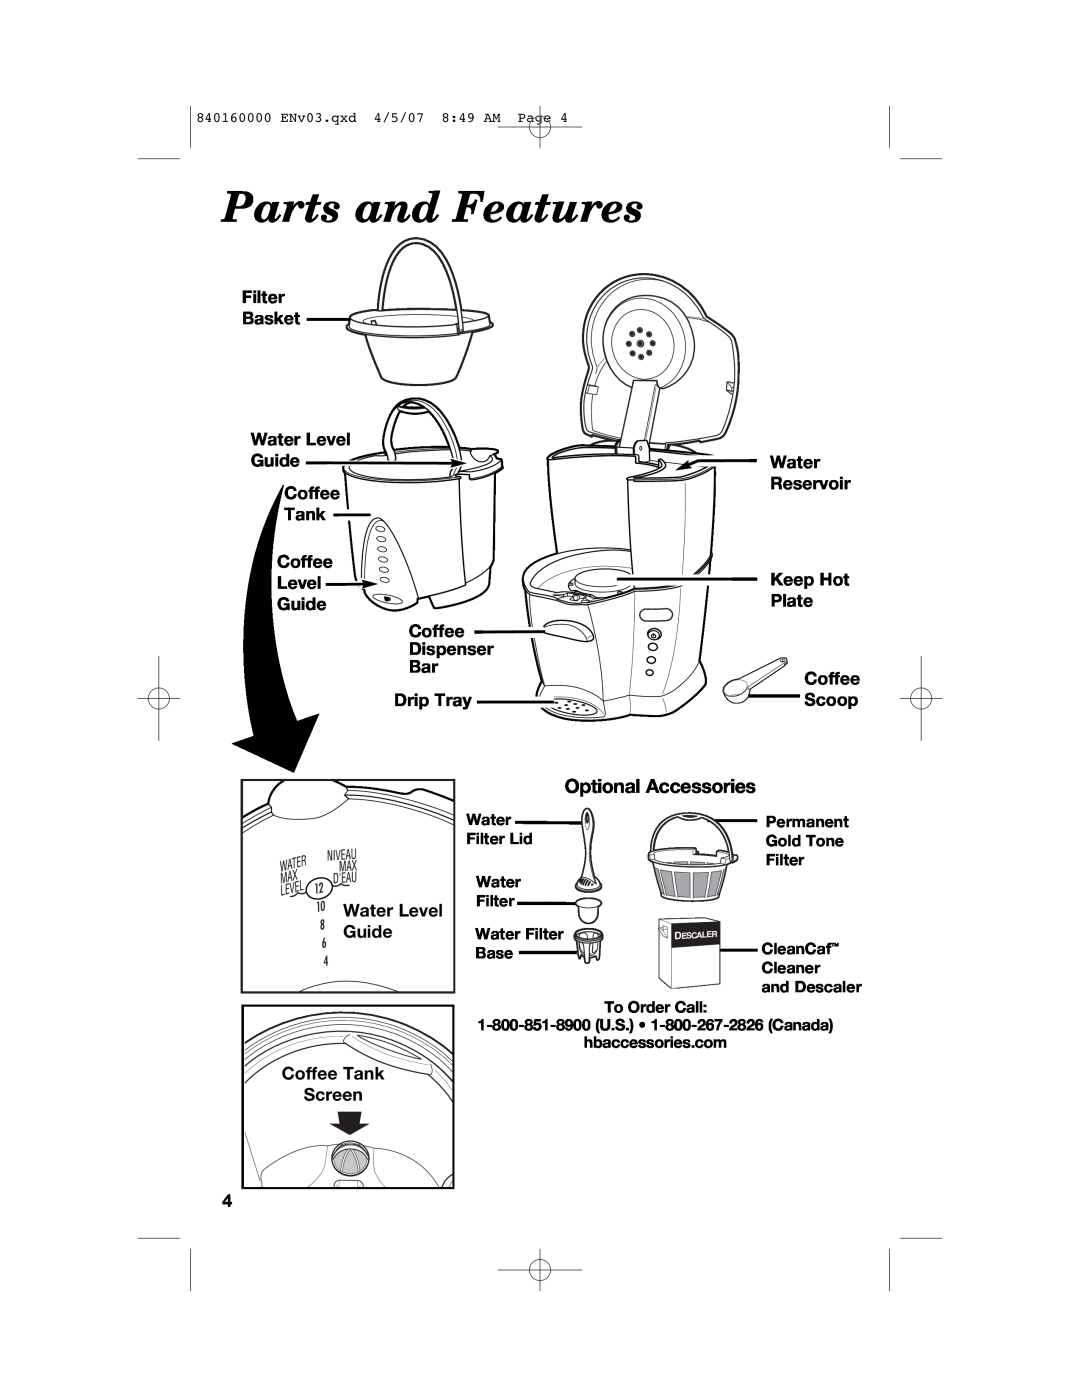 Hamilton Beach D43012B manual Parts and Features, Optional Accessories, Dispenser Bar Drip Tray 